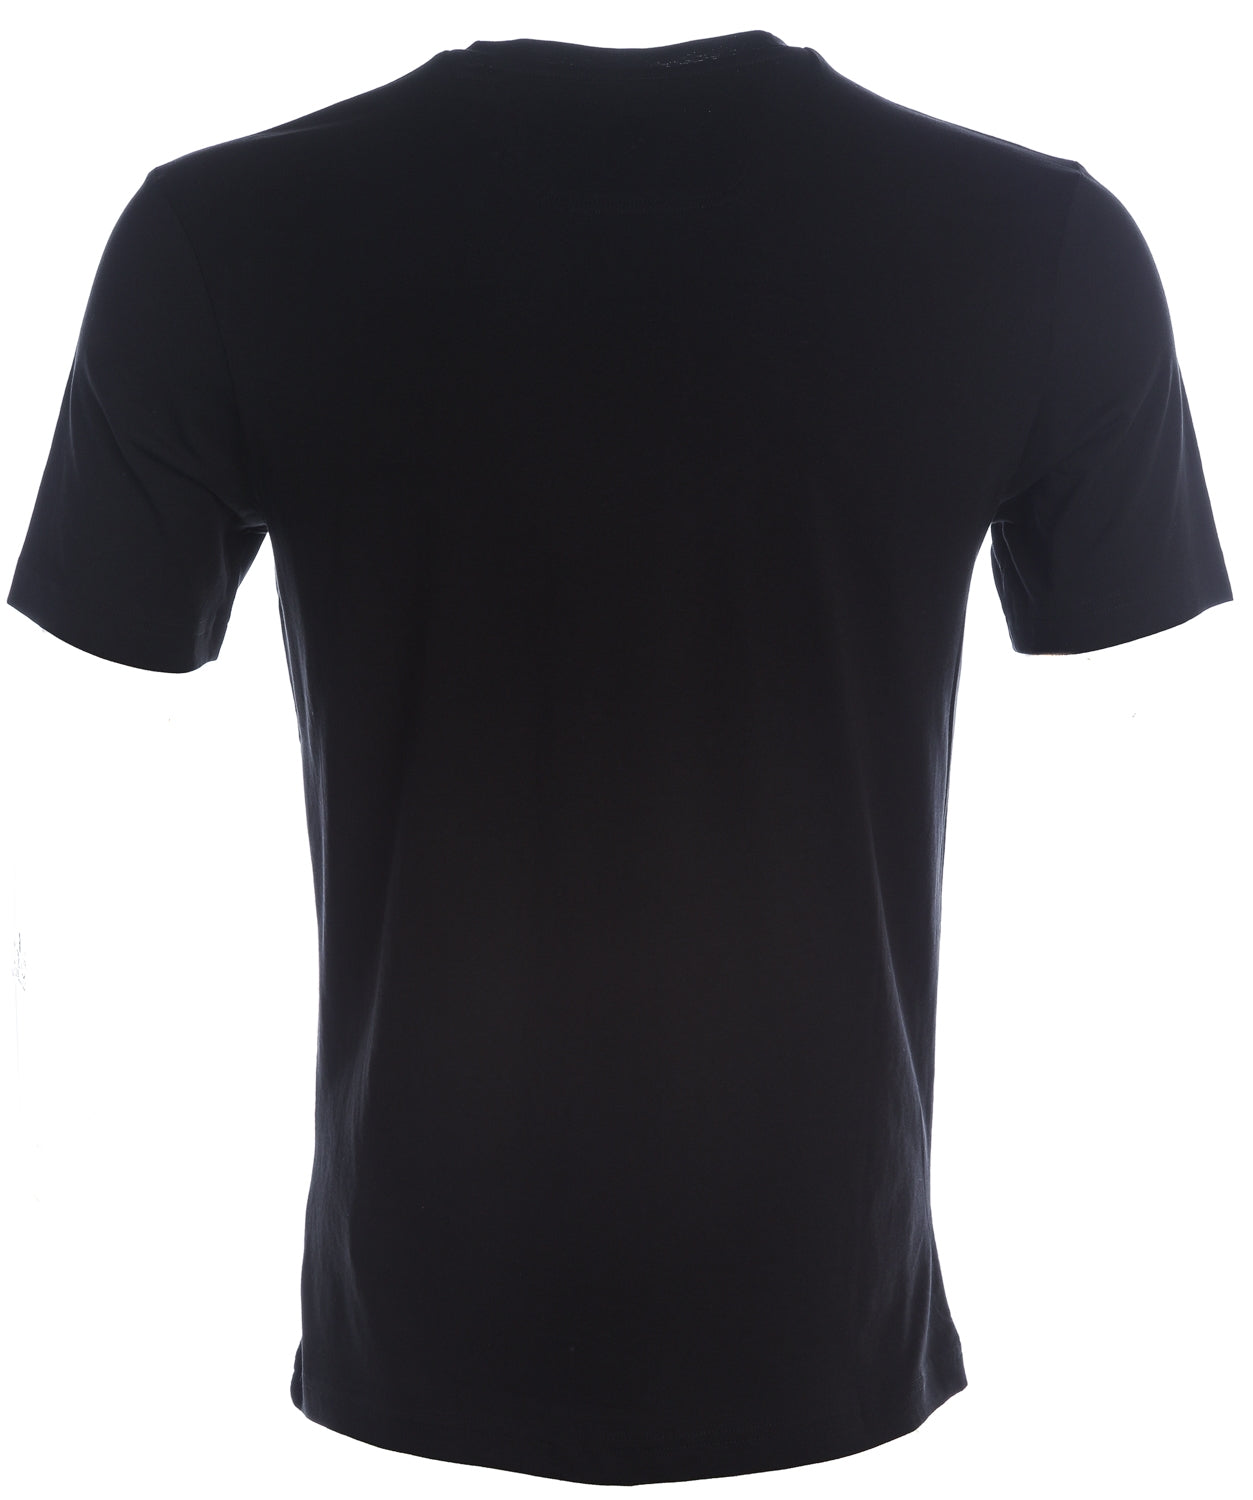 BOSS Tee 4 T-Shirt in Black